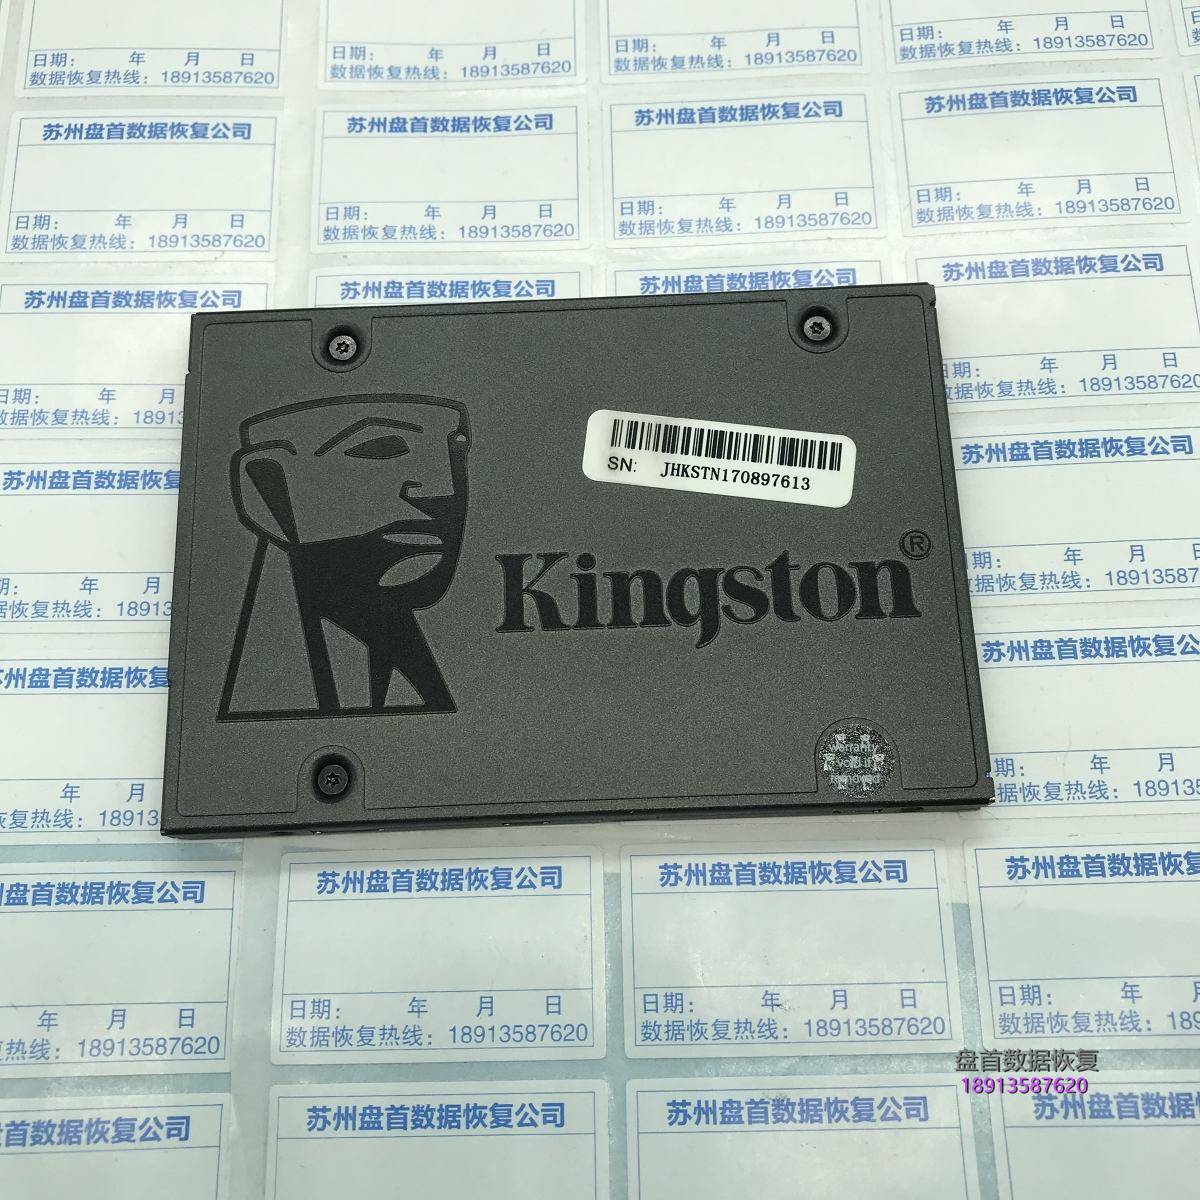 Kingston 480G掉盘无法读取数据型号变成SATAFIRM S11数据恢复成功